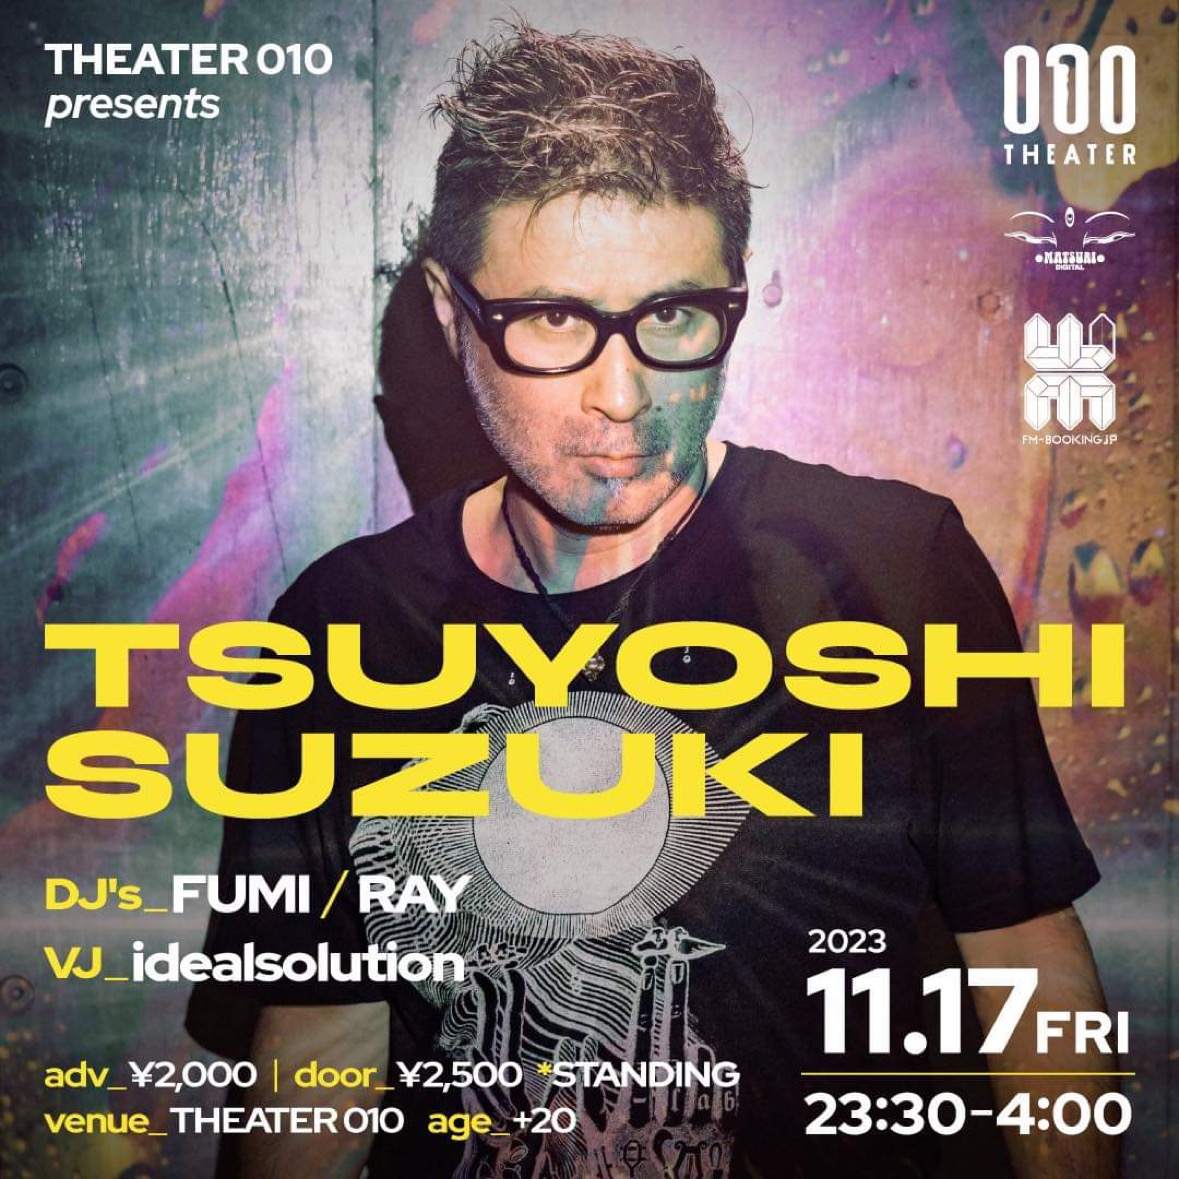 Theater010 presents【Tsuyoshi Suzuki】 - フライヤー表